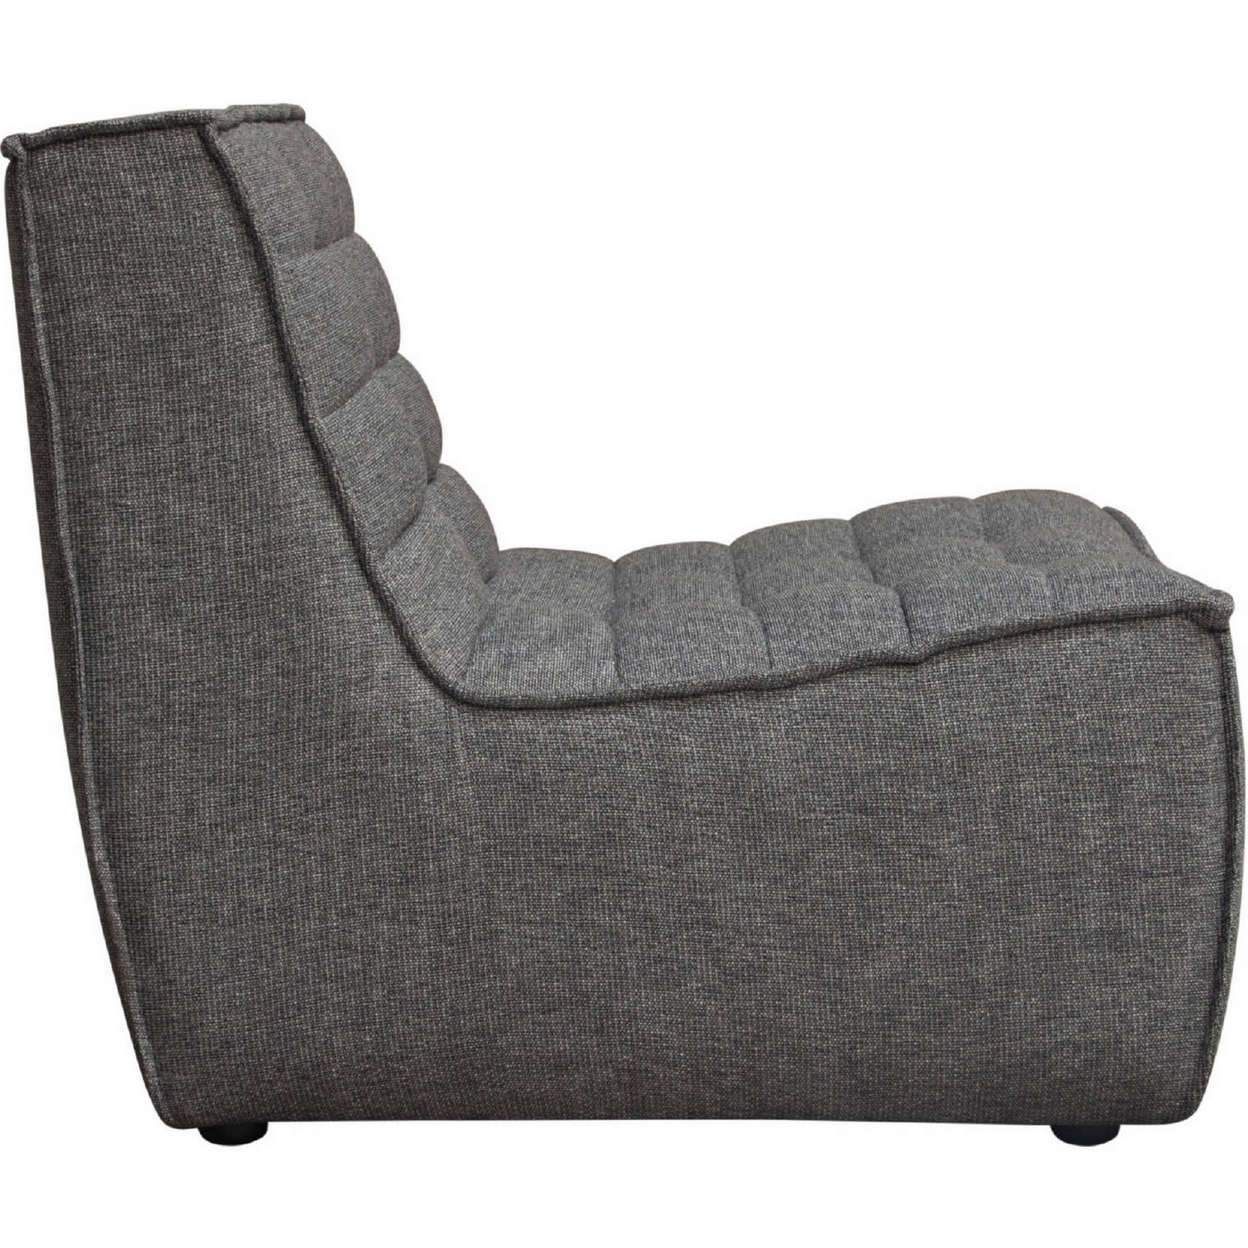 52 Inch Modern Armless Chair, Scooped Seat, Tufted, Modular, Smooth Gray- Saltoro Sherpi